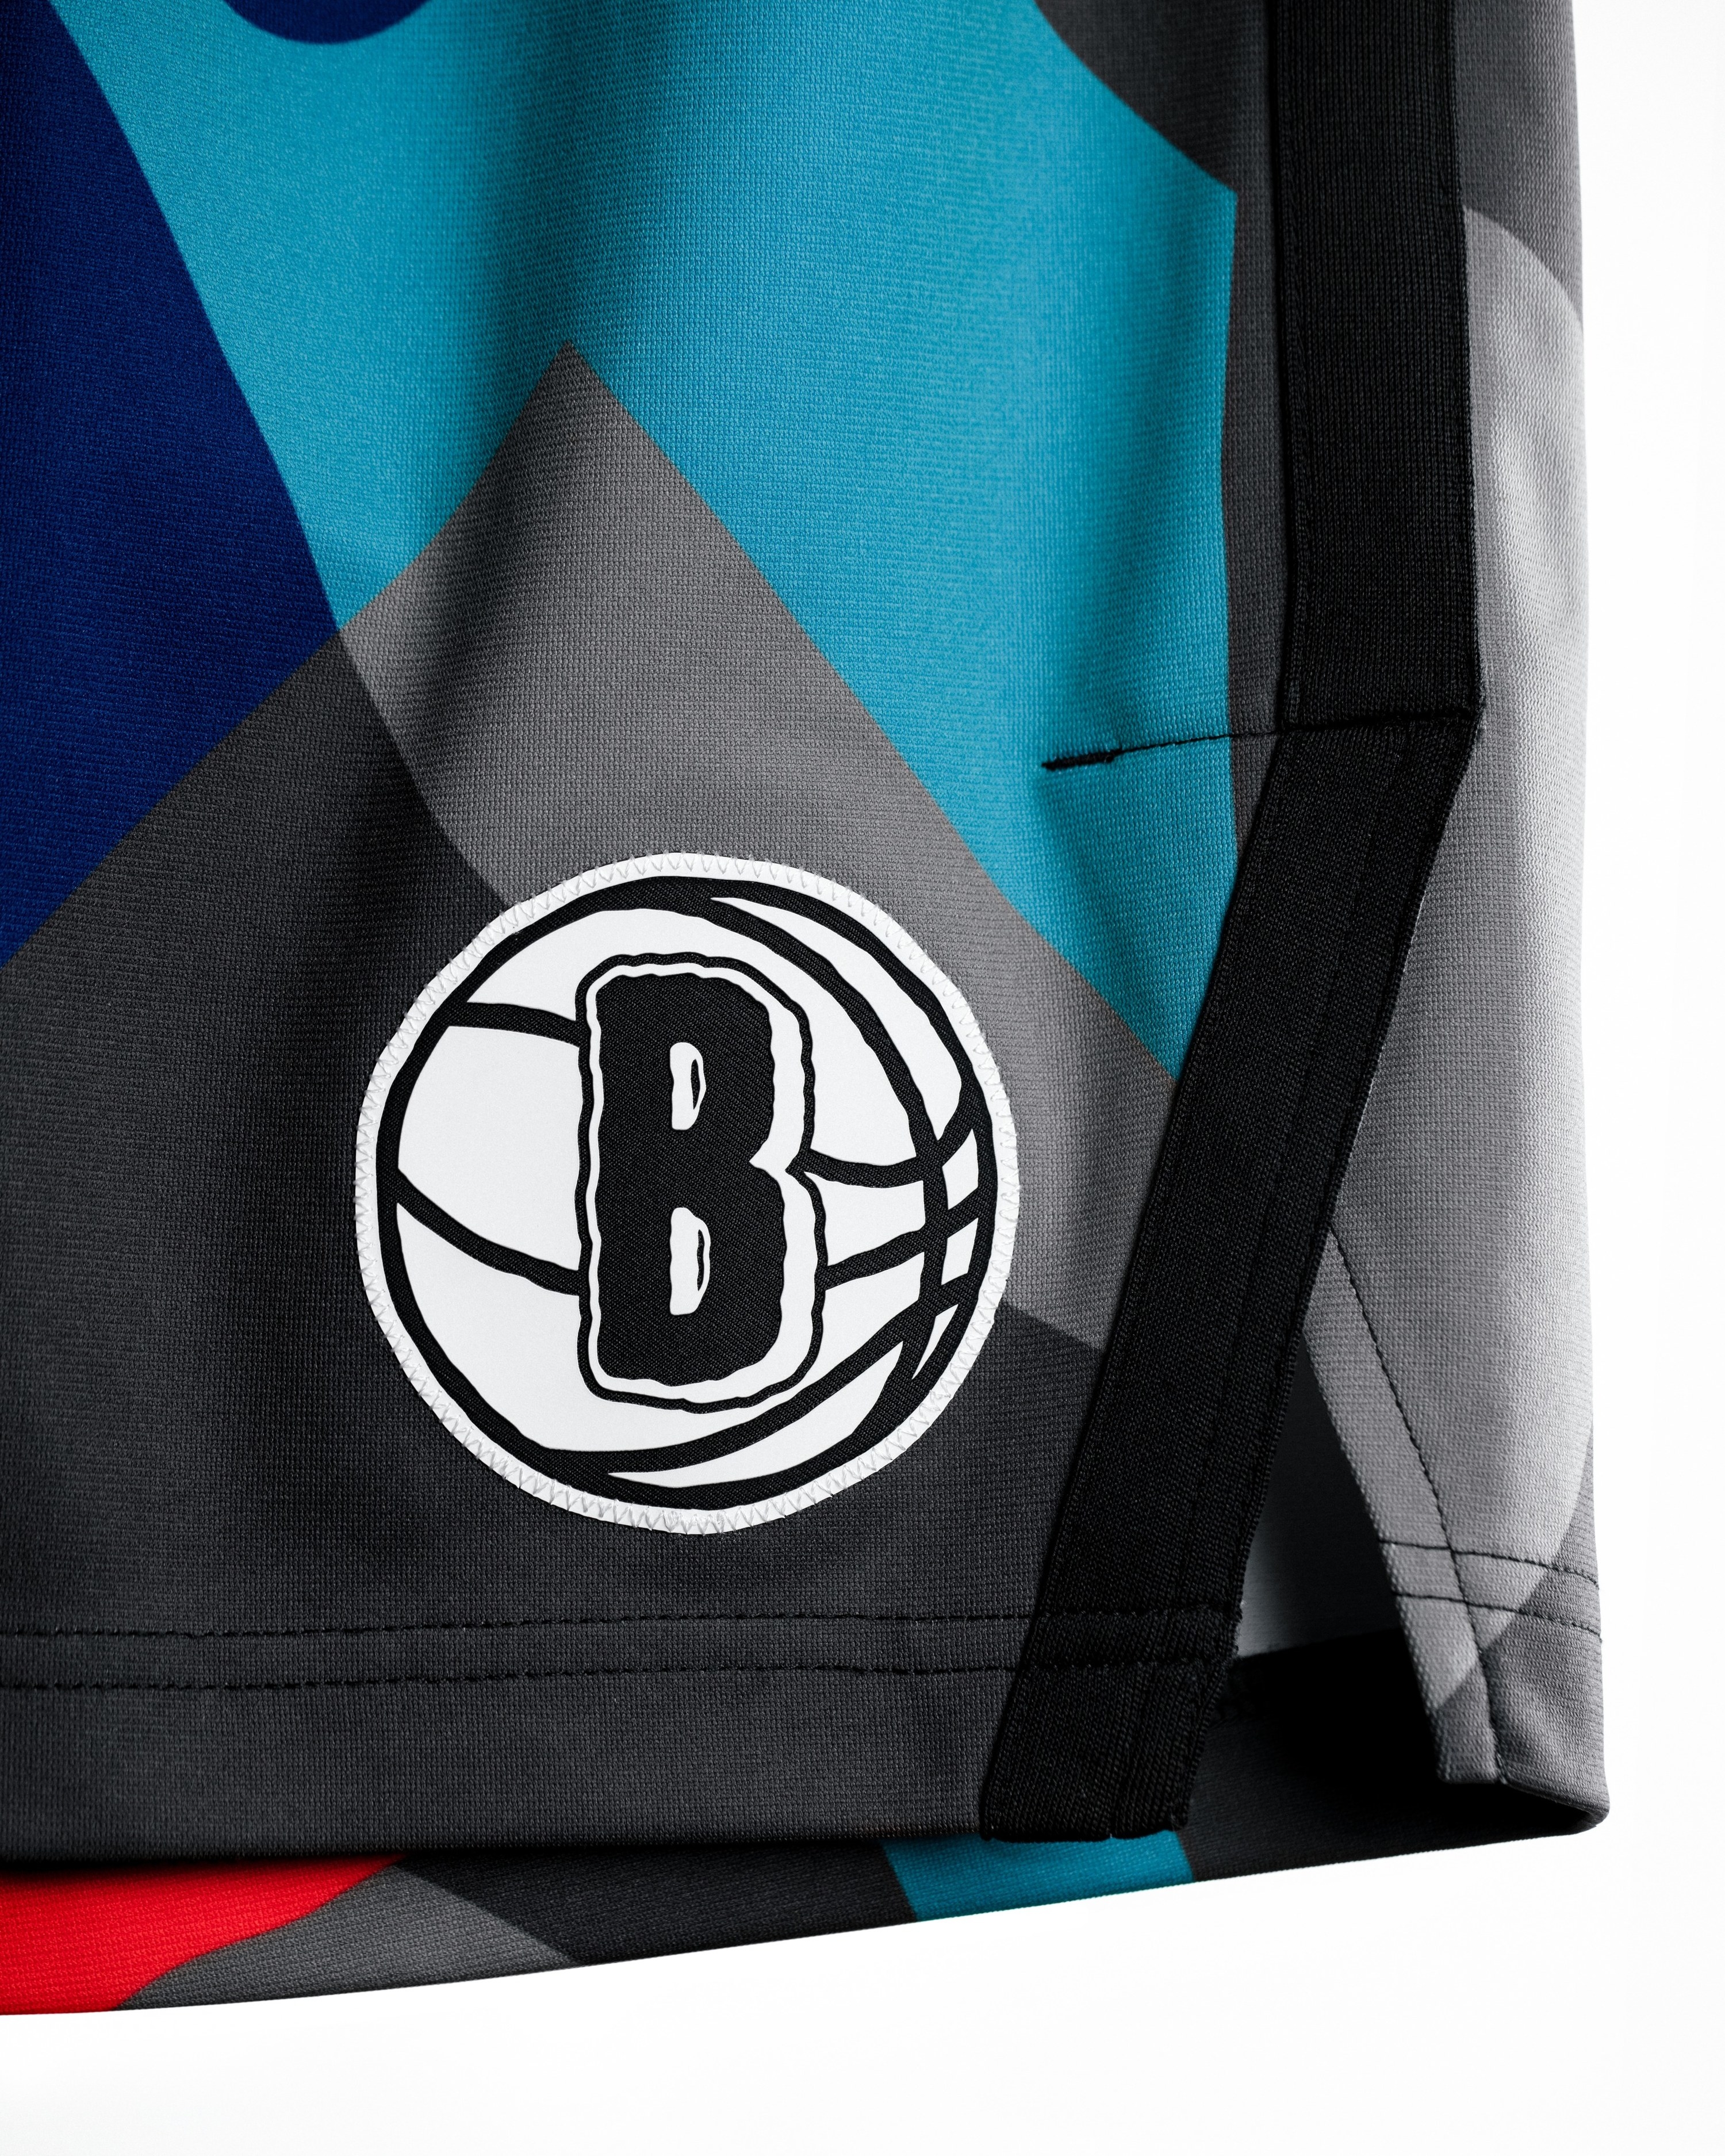 KAWS Enlisted for Brooklyn Nets' NBA City Edition Uniform by Nike